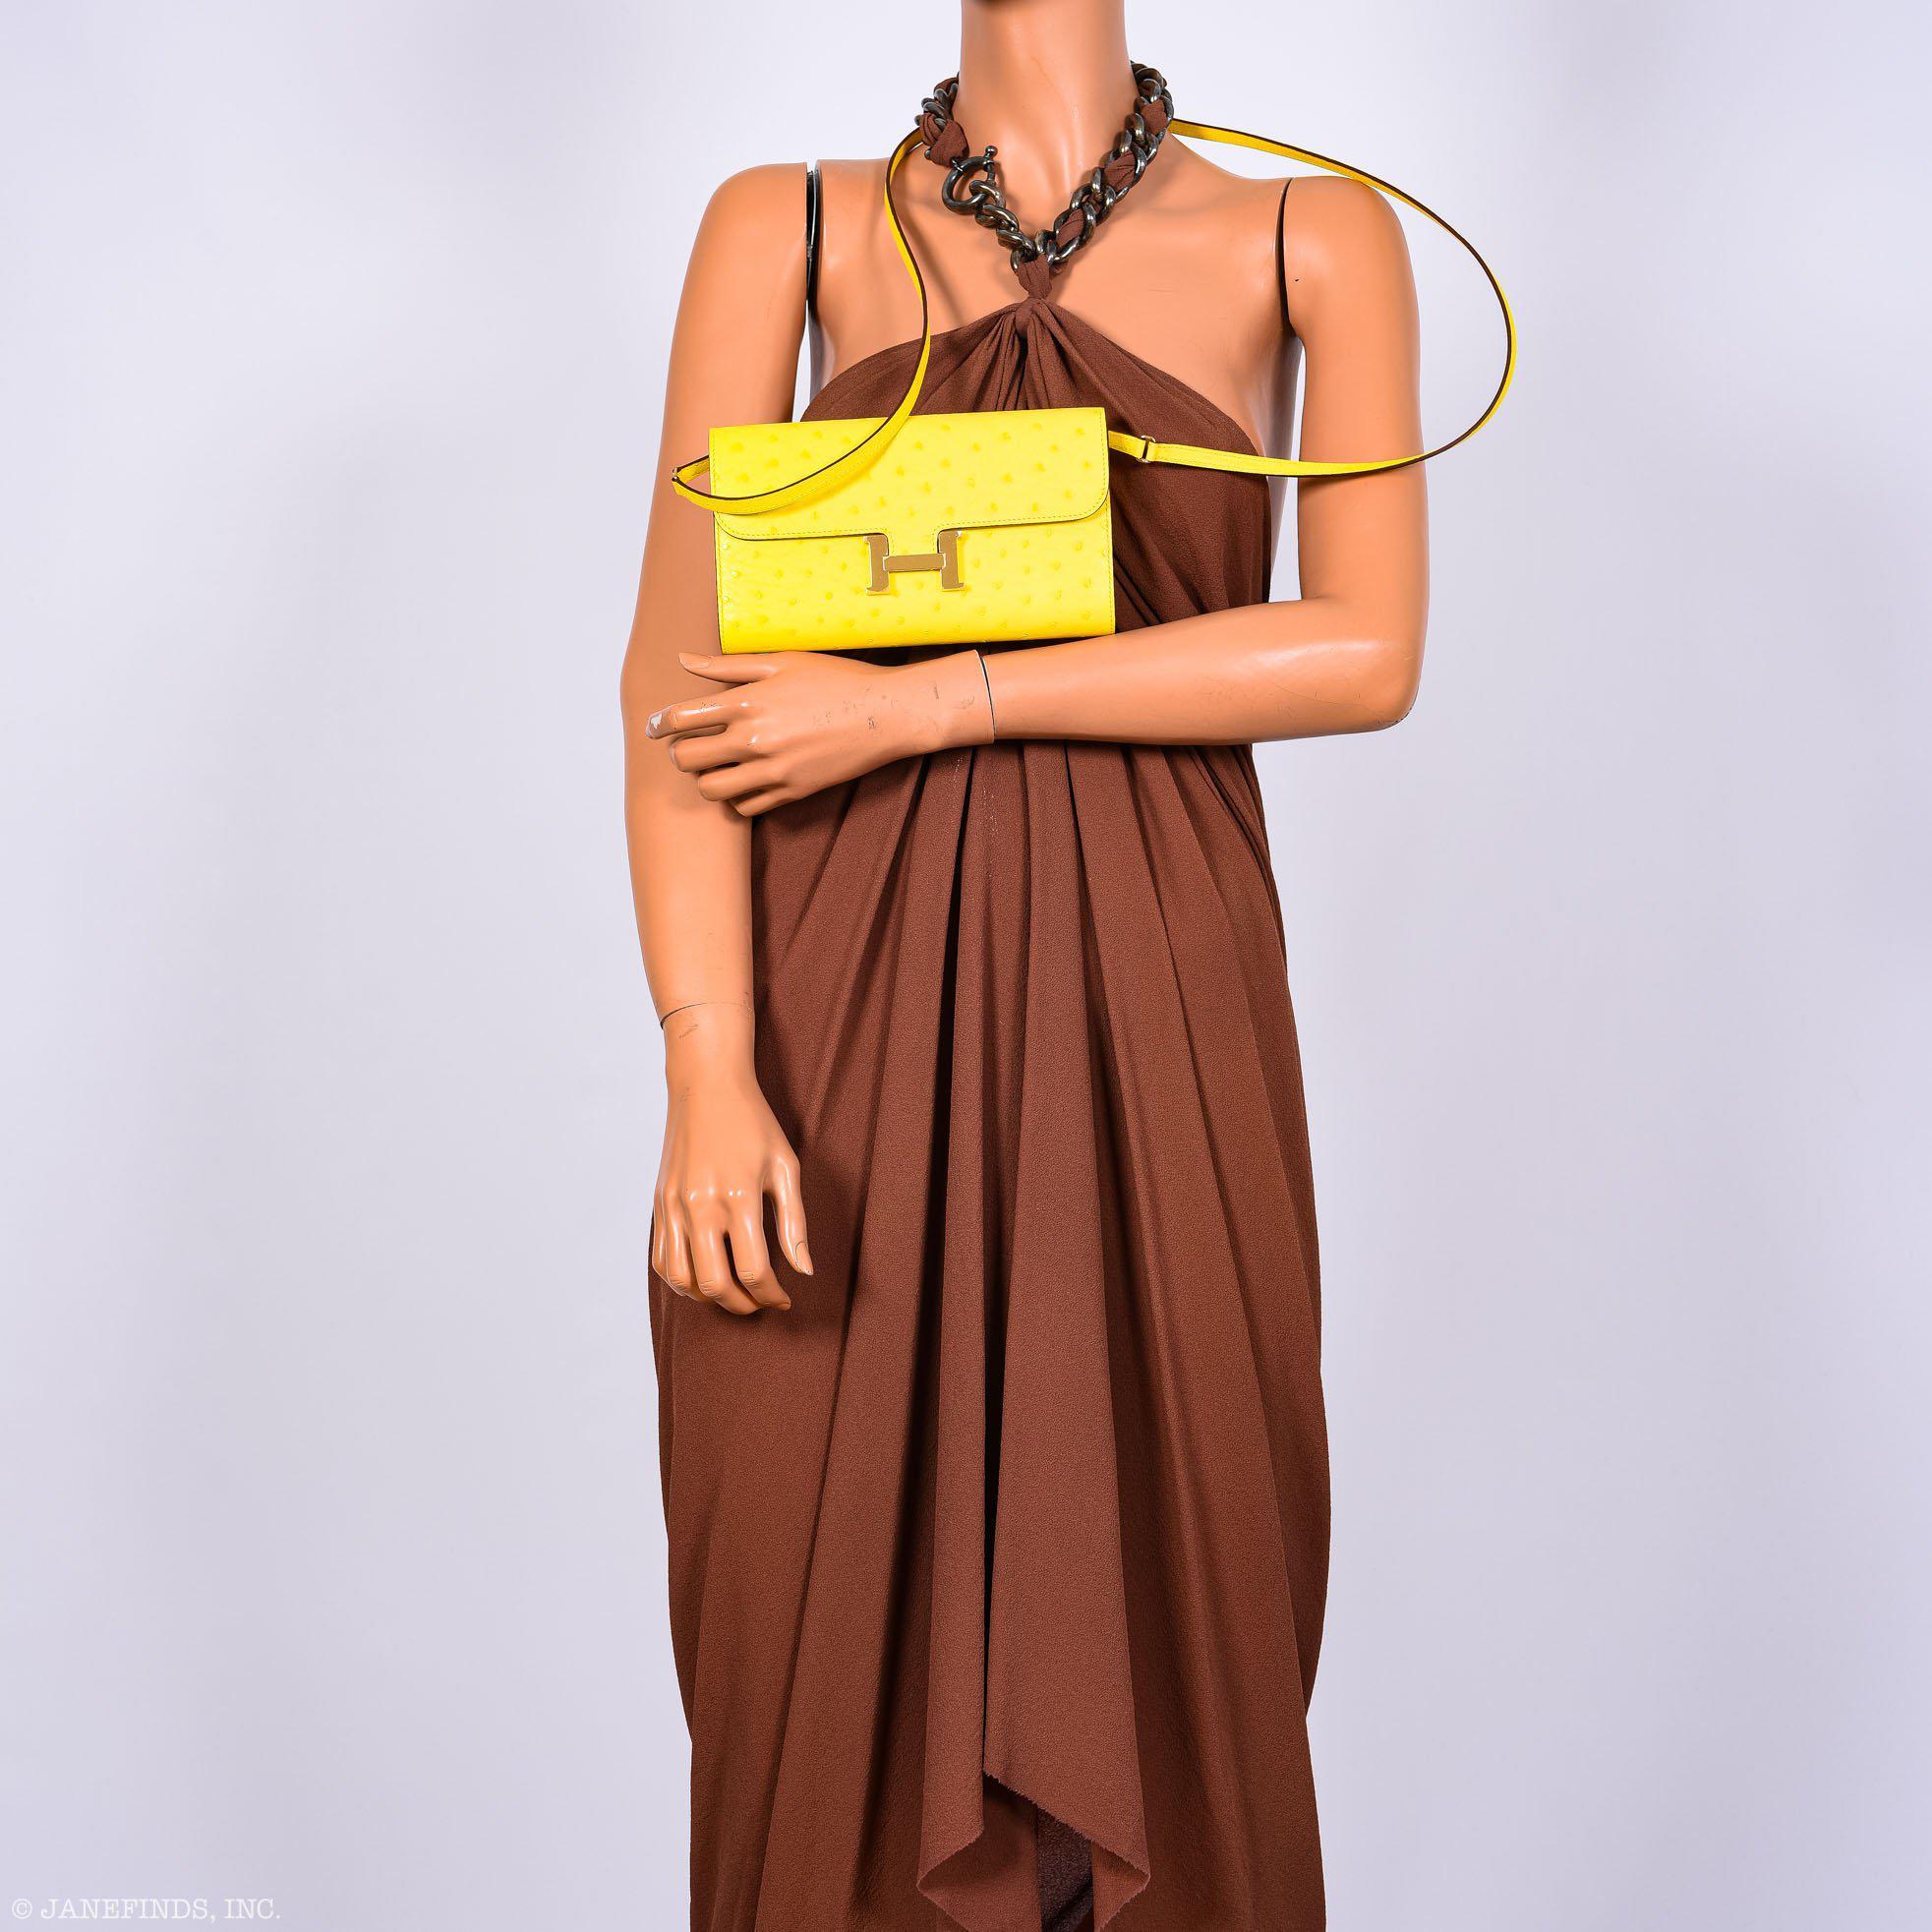 Hermès Constance Long to Go Wallet Citron Ostrich Gold Hardware - 2020, Y